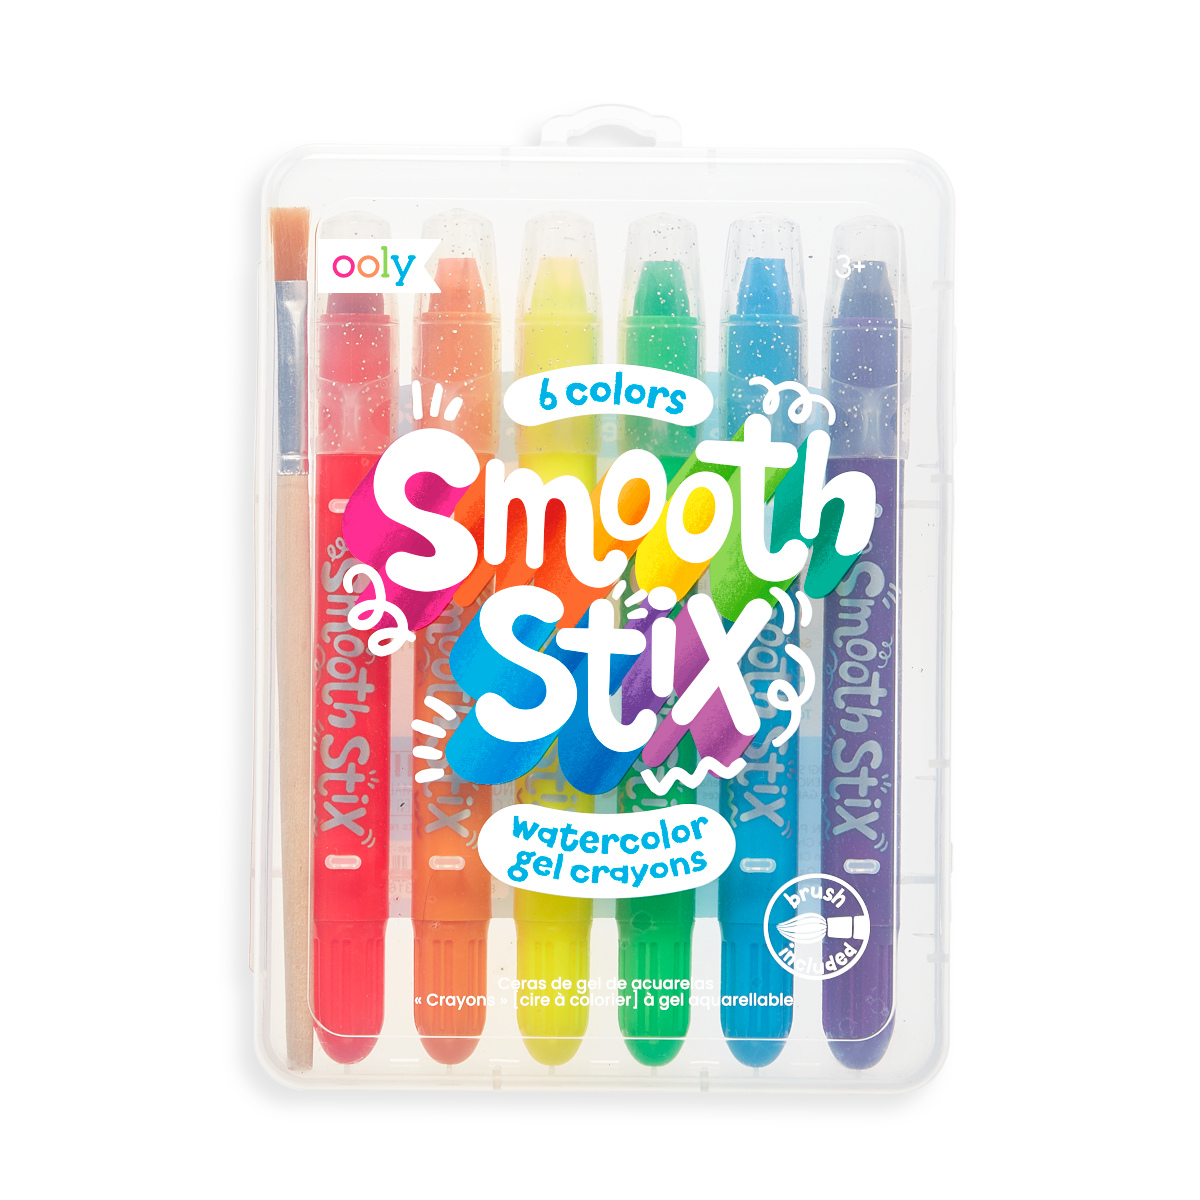 Rainbow Scoops Vanilla Scented Stacking Erasable Crayons